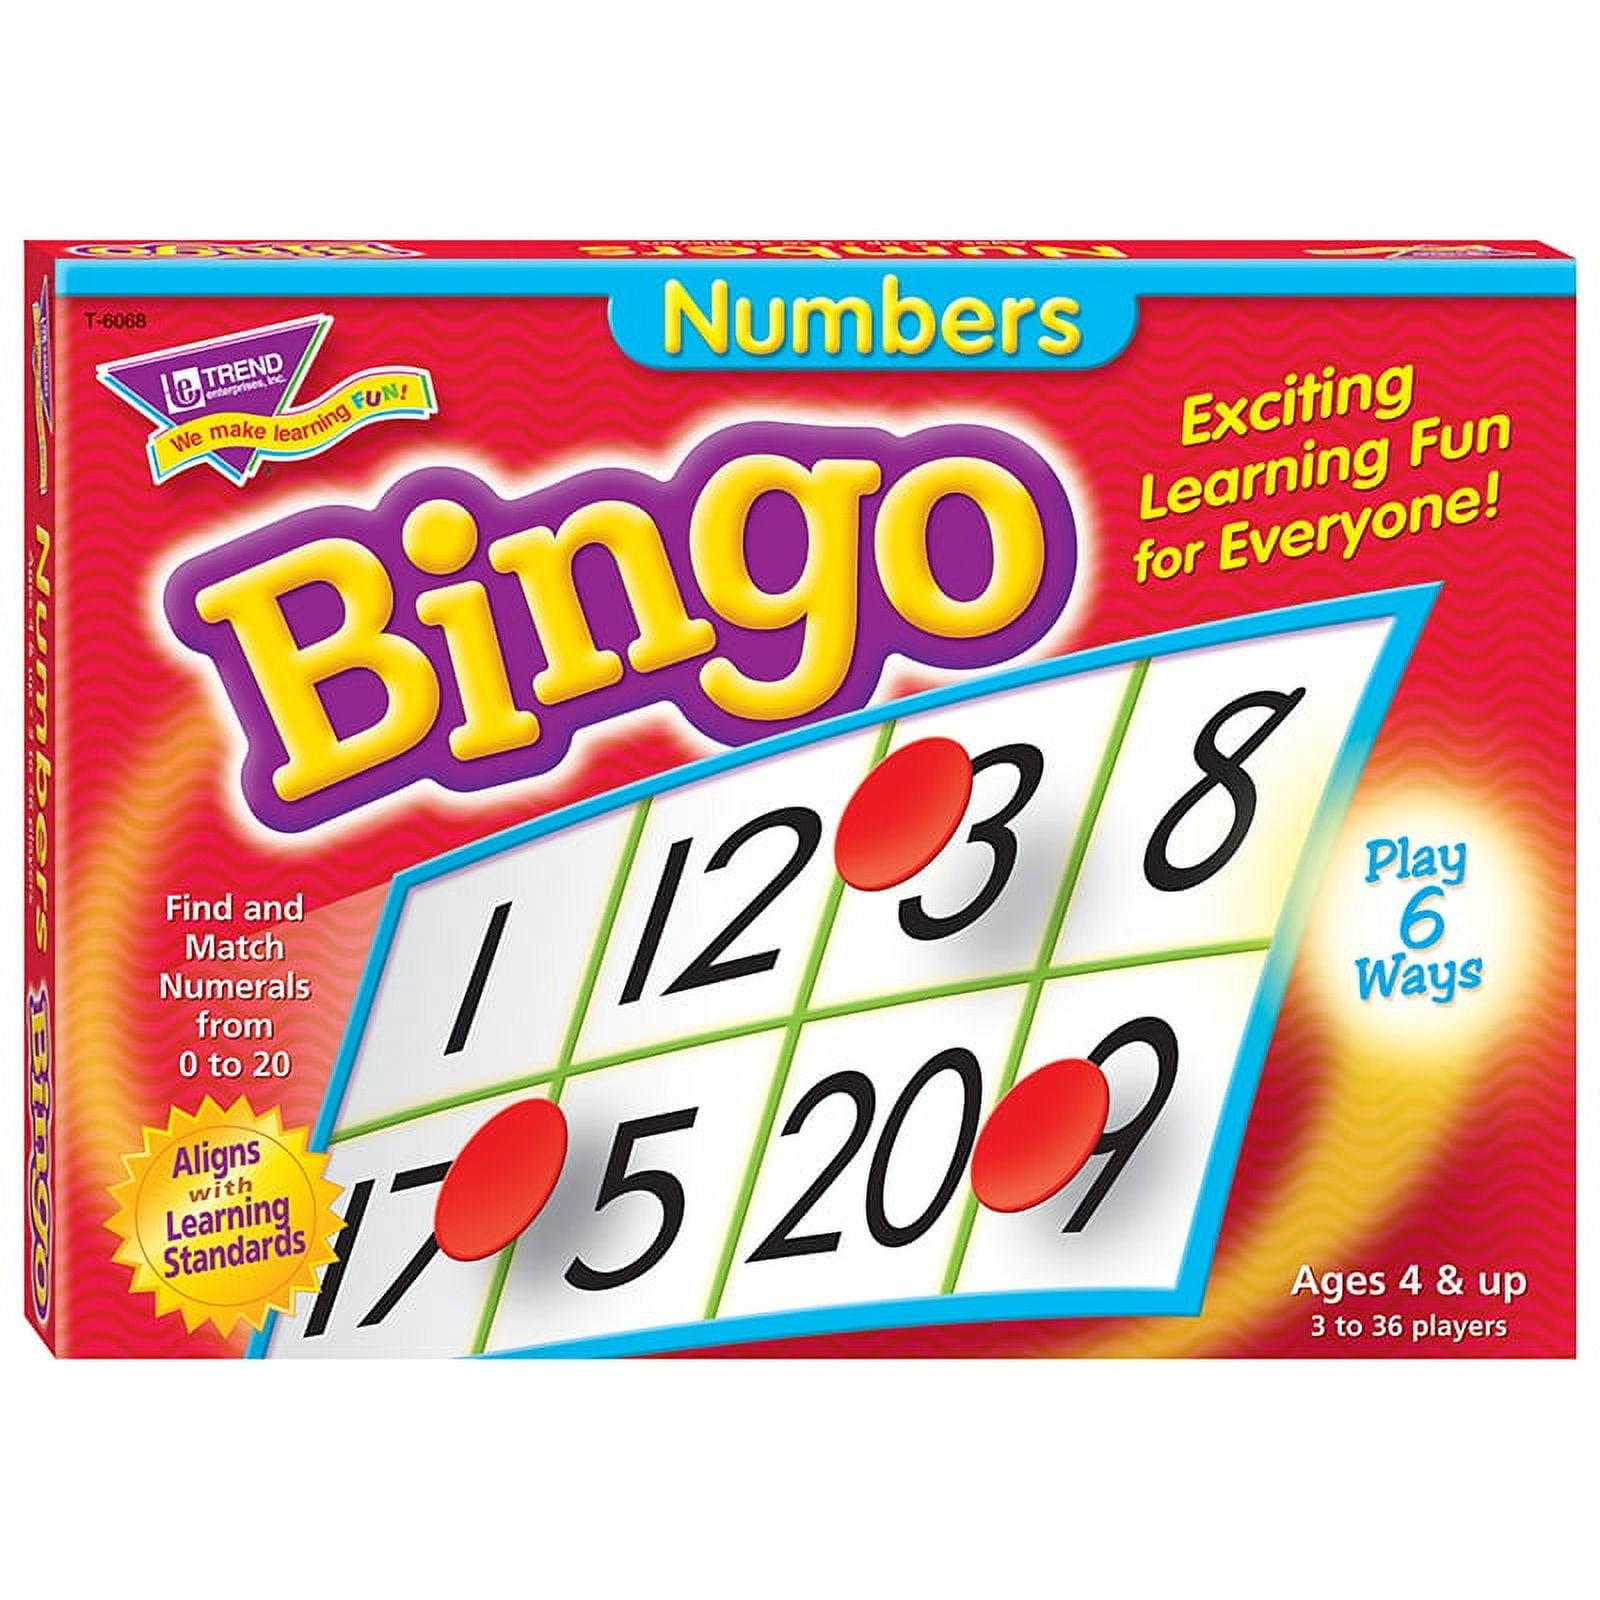 Clearance Depot - New Royal Bingo Supplies Bingo Daubers, Pack of 10